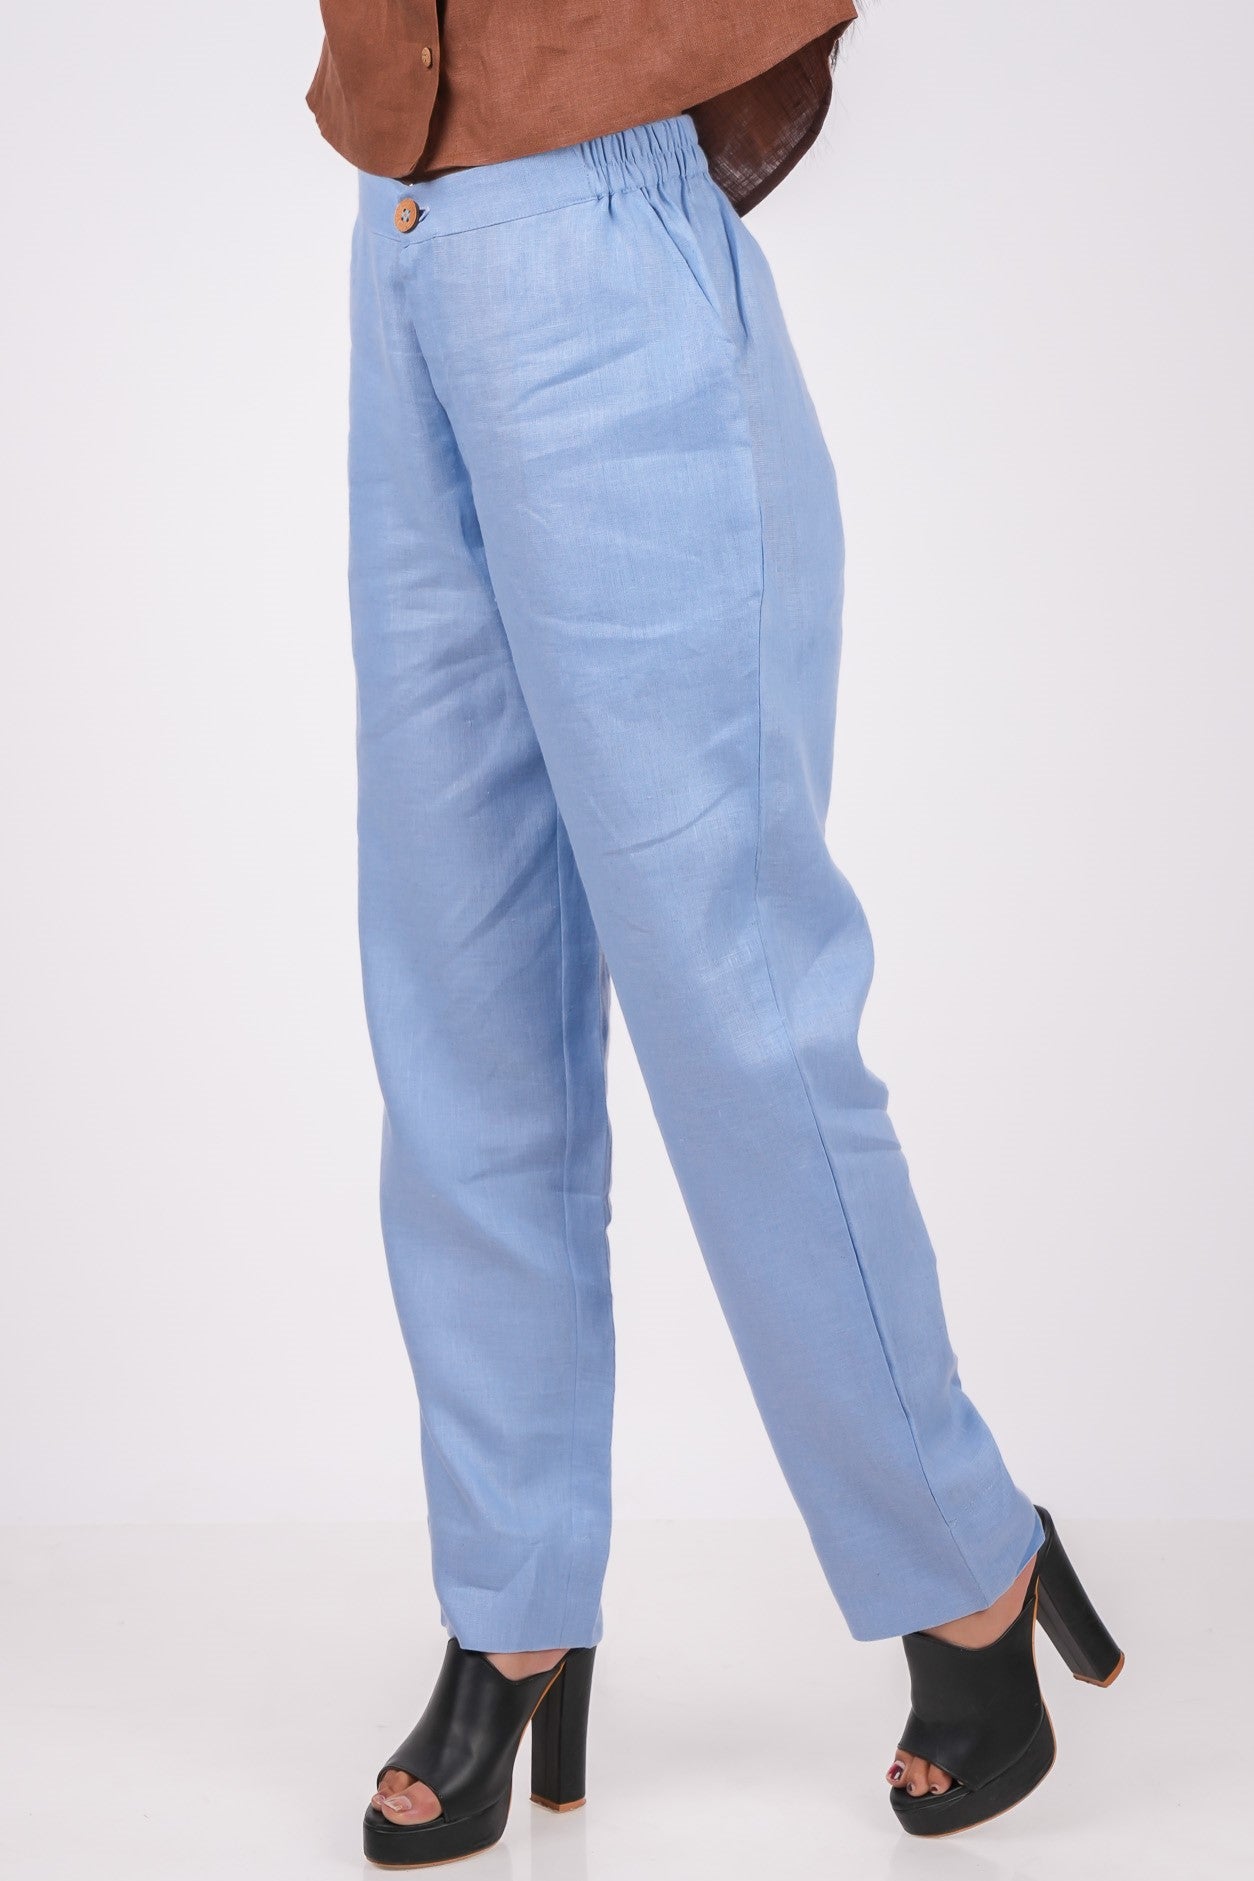 Ocean Blue Linen Pants For Women – LININ